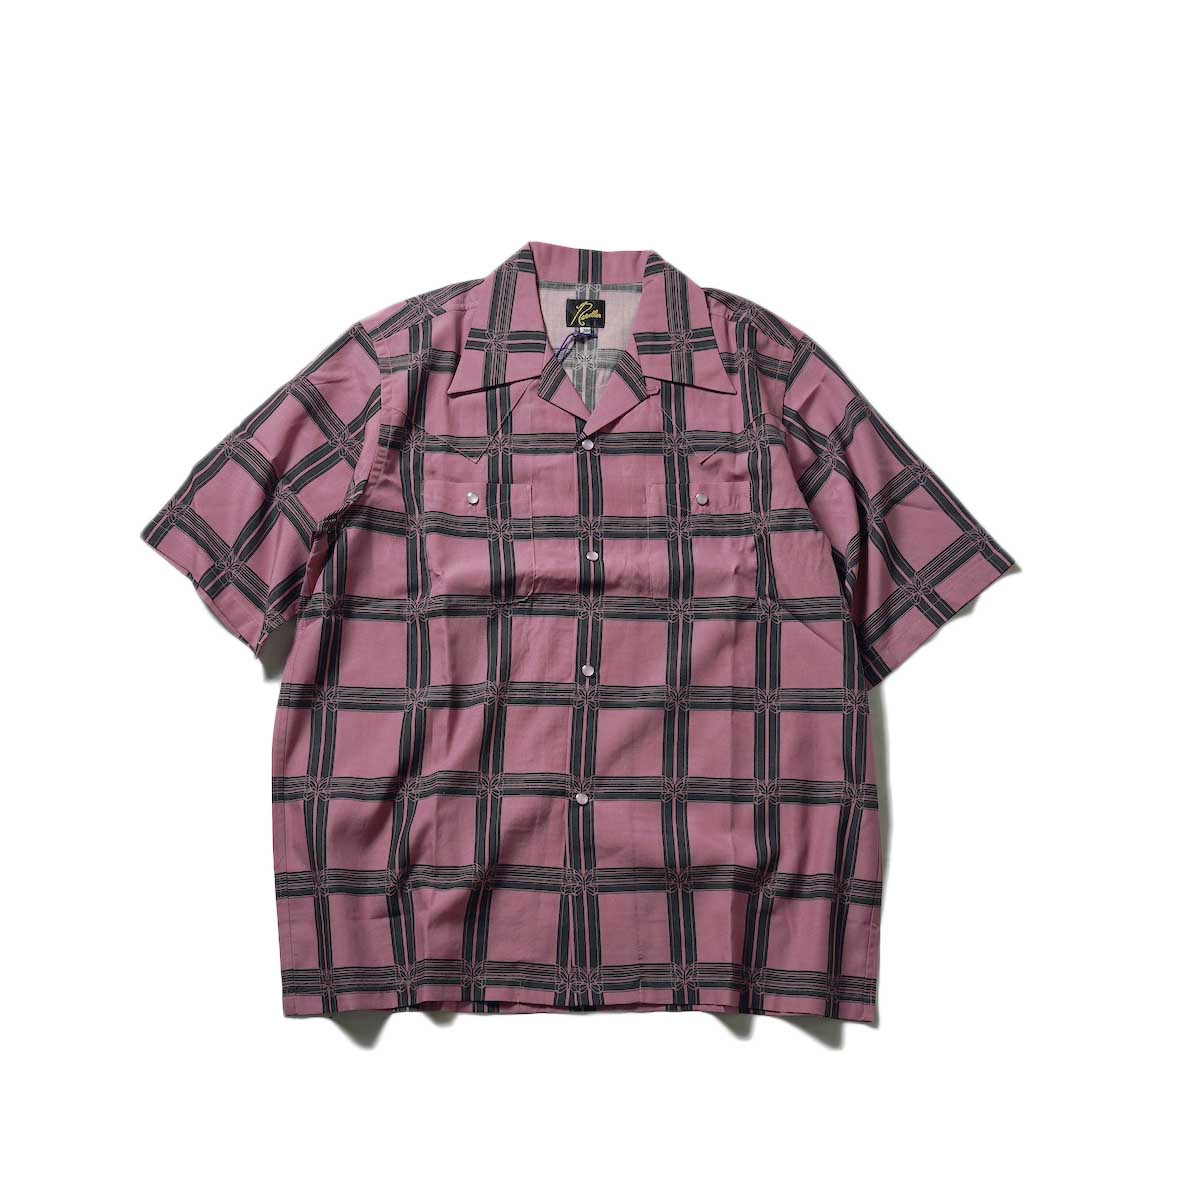 Needles / S/S Cowboy One-Up Shirt - R/C Lawn Cloth / Papillon Plaid(Pink)